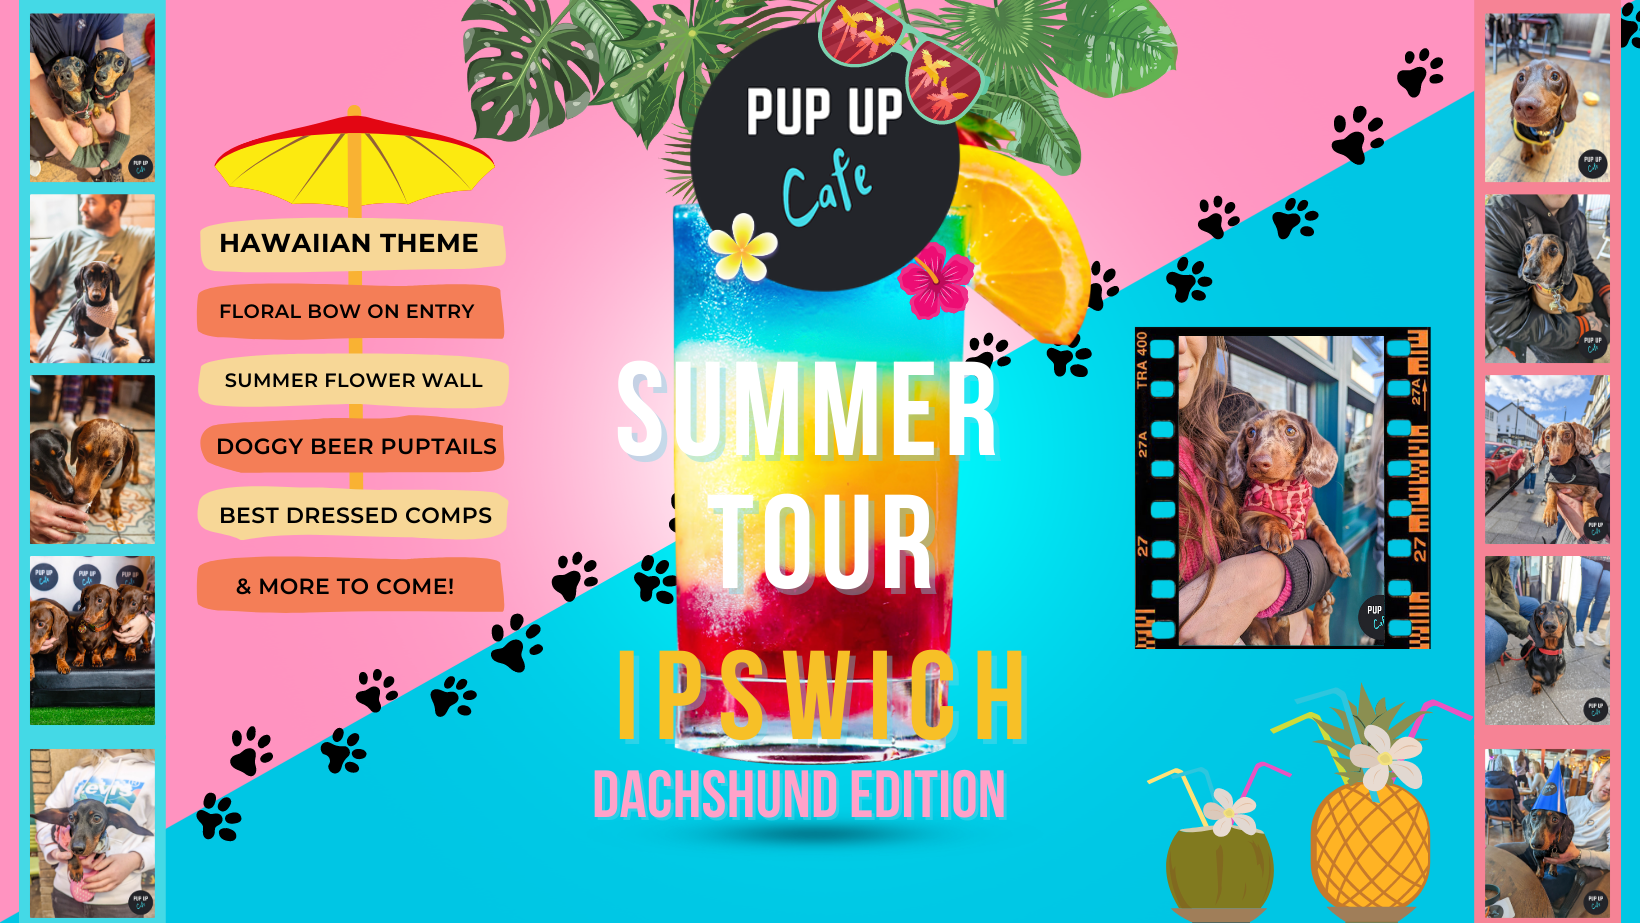 Dachshund Pup Up Cafe – Ipswich | SUMMER TOUR! 🌞